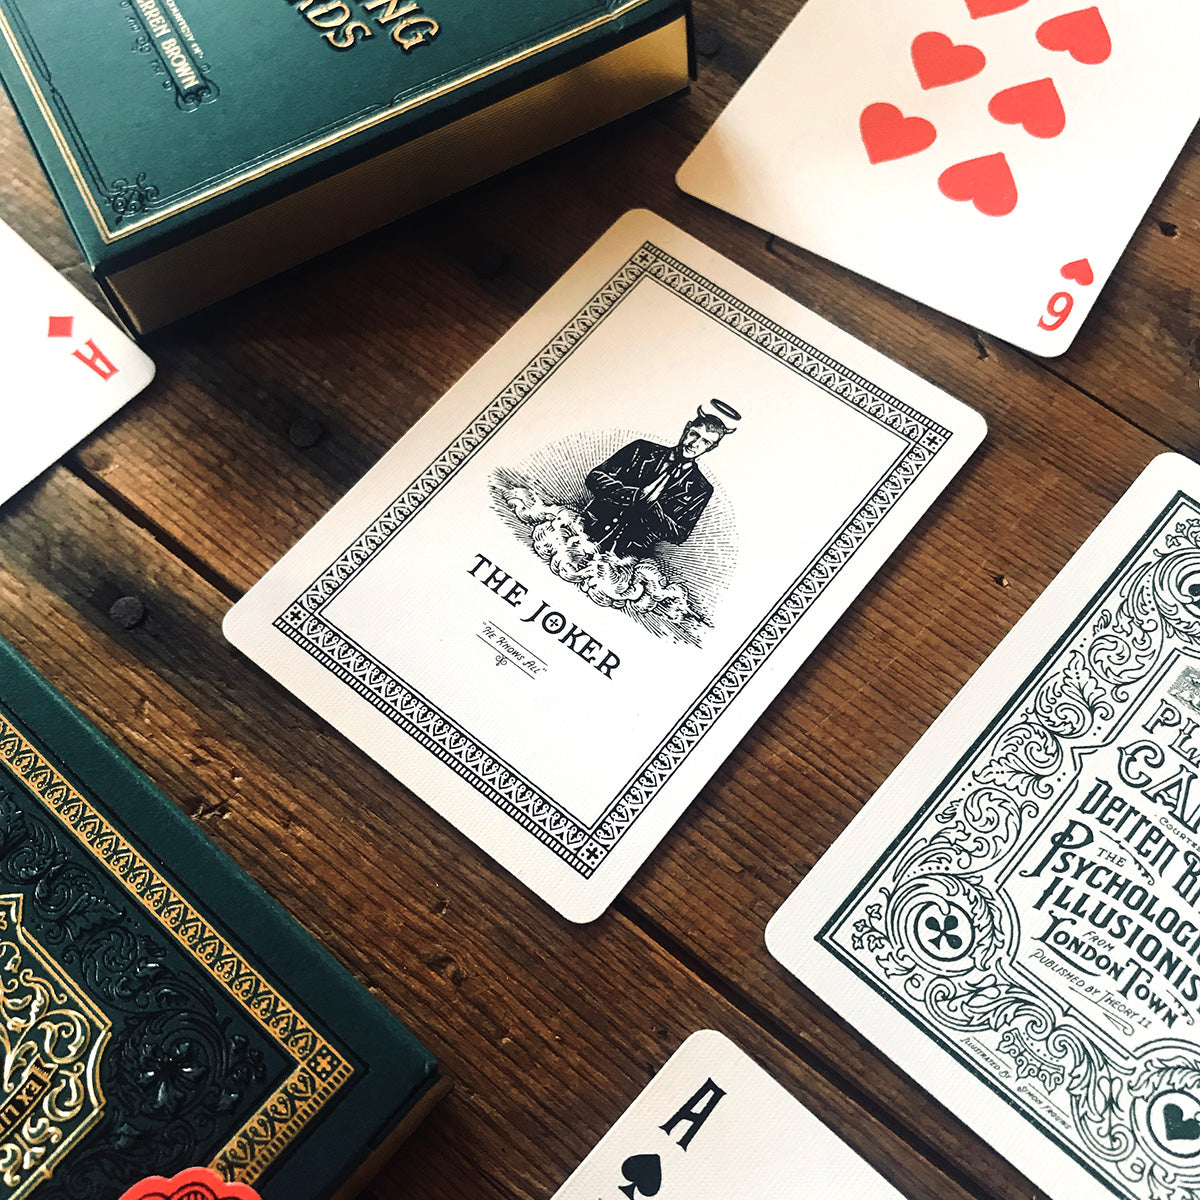 Derren Brown playing cards deck - MR CUP